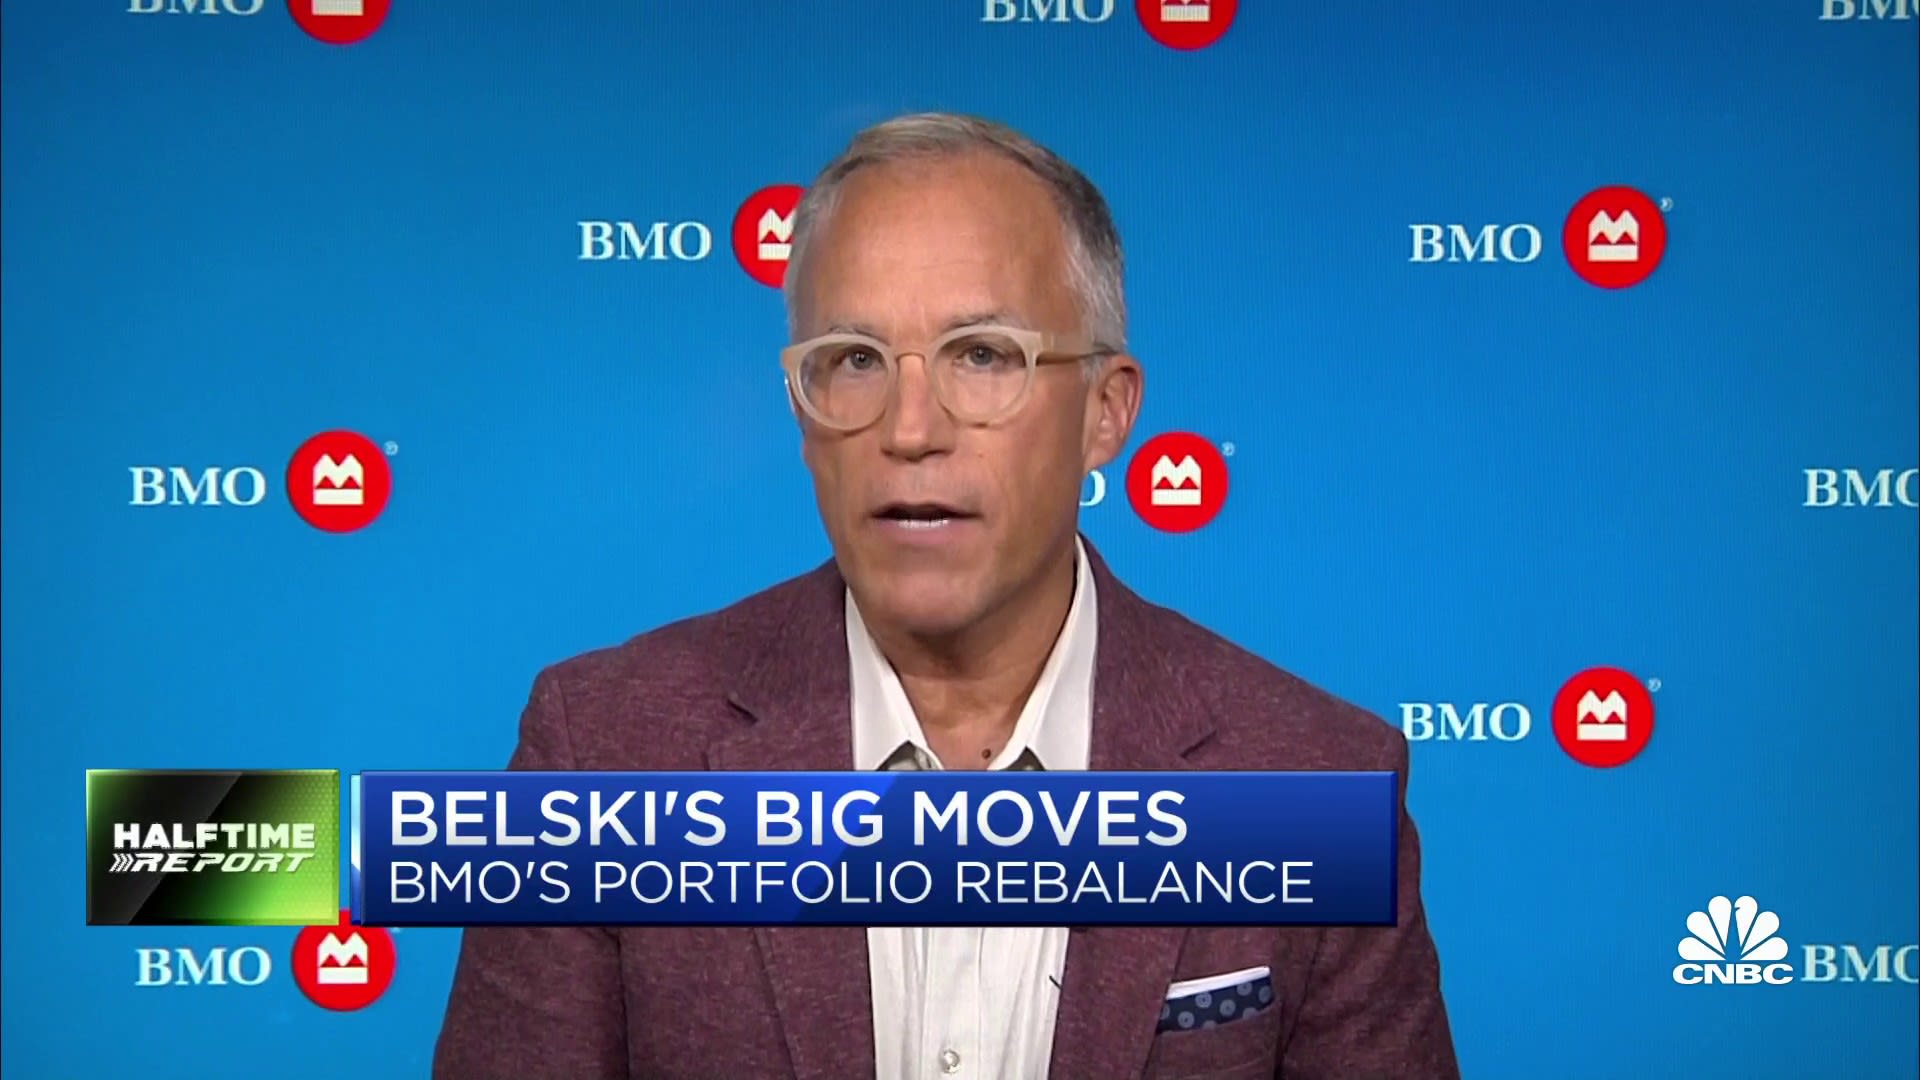 BMO’s Brian Belski makes big moves in his portfolio